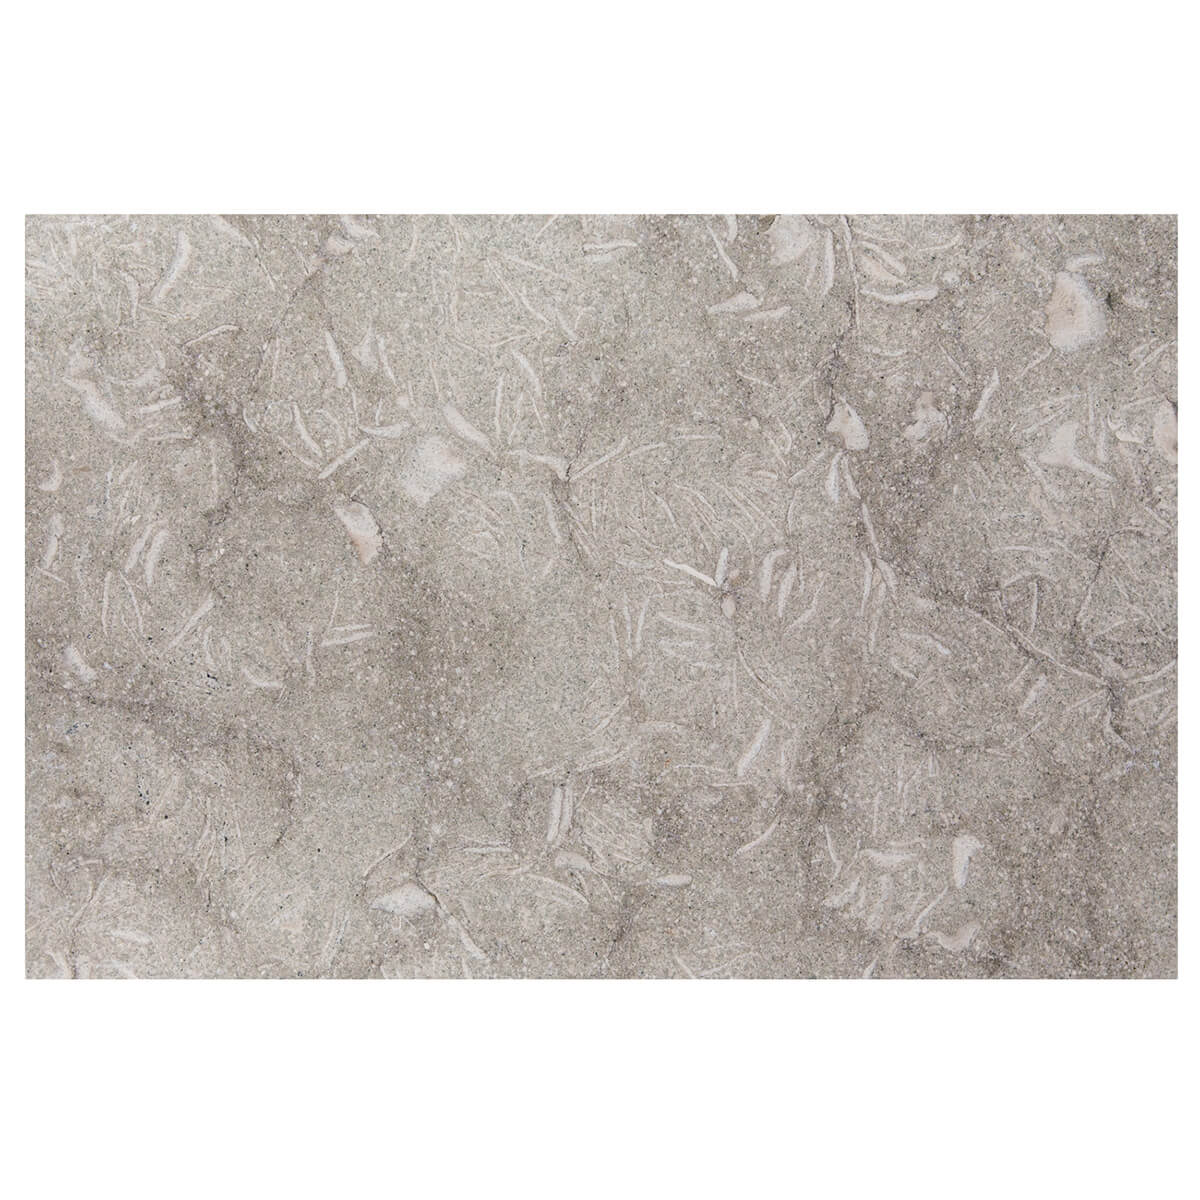 haussmann pistache seagrass limestone rectangle natural stone field tile 16x24 flamed